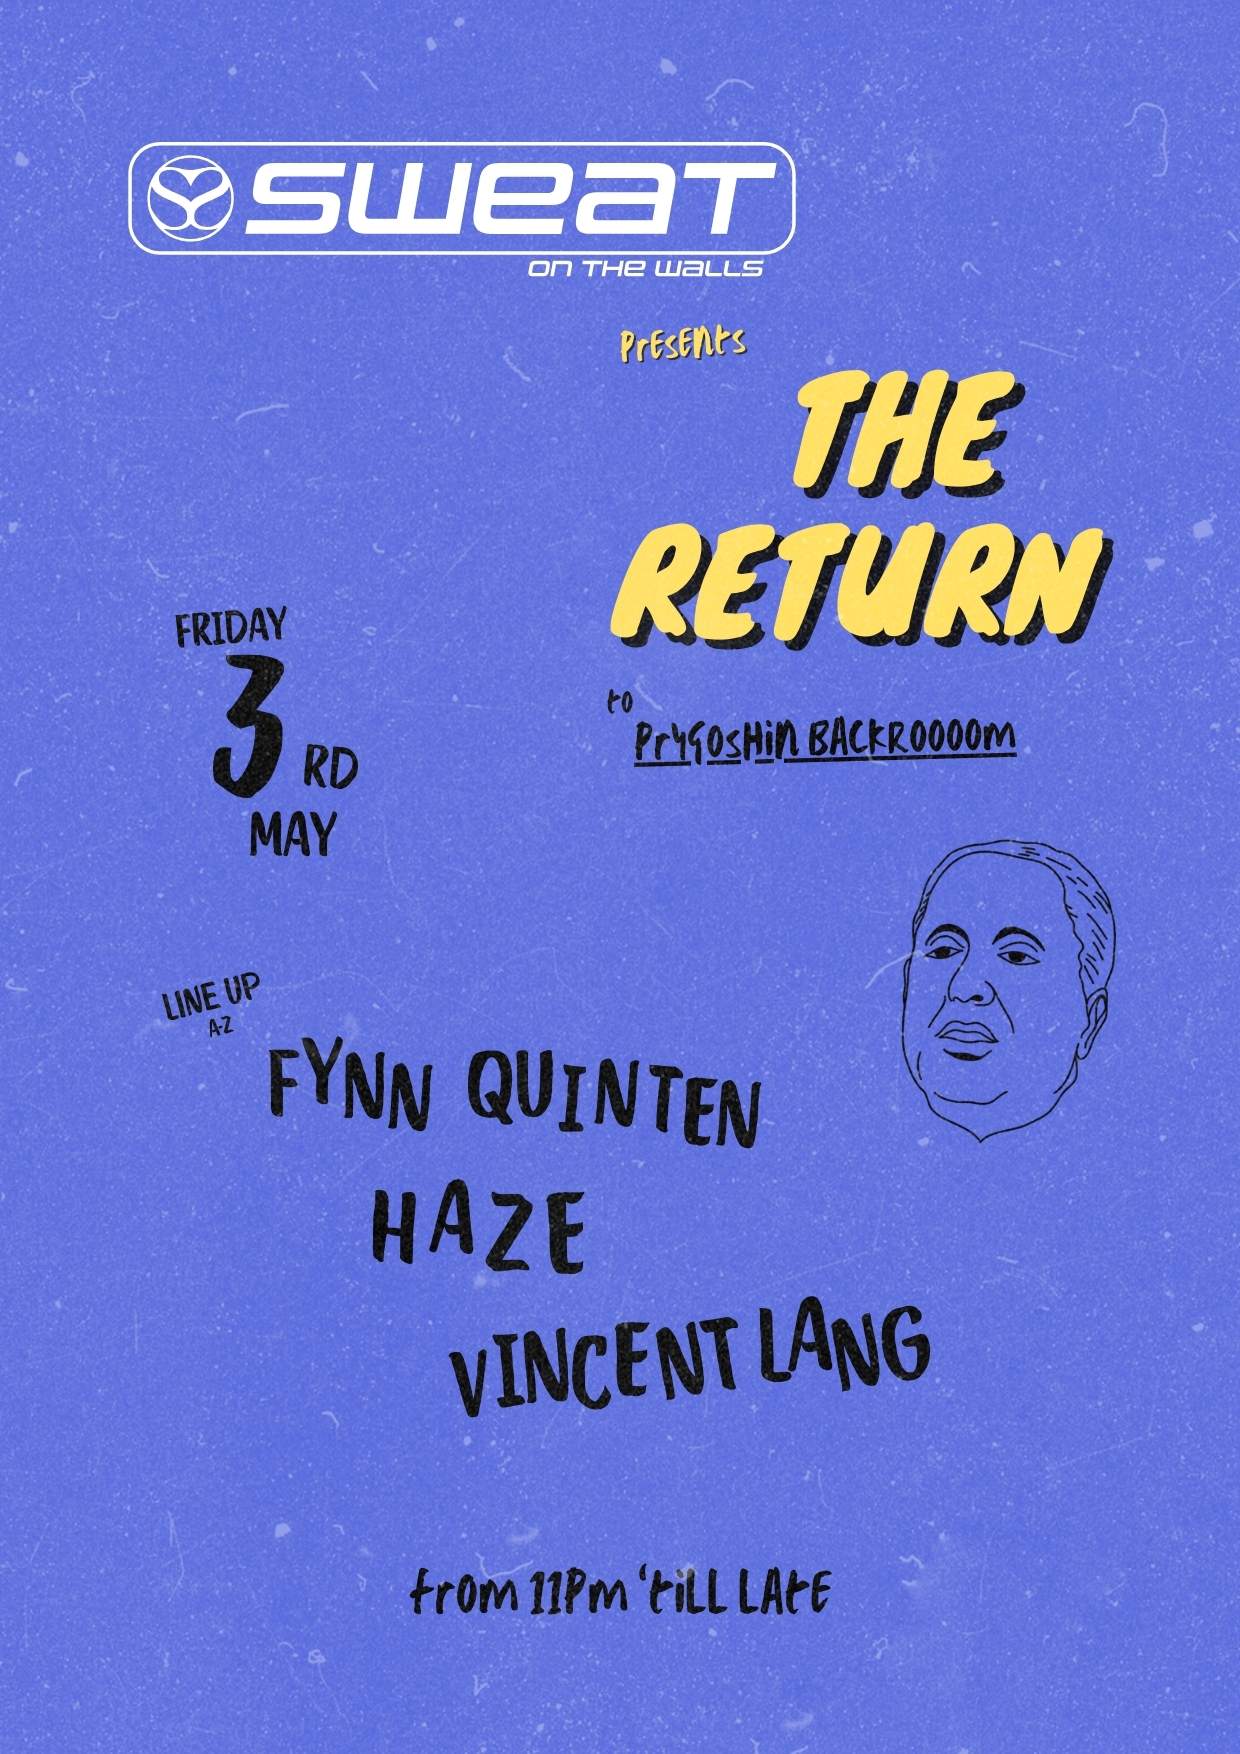 SWEAT presents THE RETURN to Prygoshin Backroom with Fynn Quinten, Haze, Vincent Lang - フライヤー表